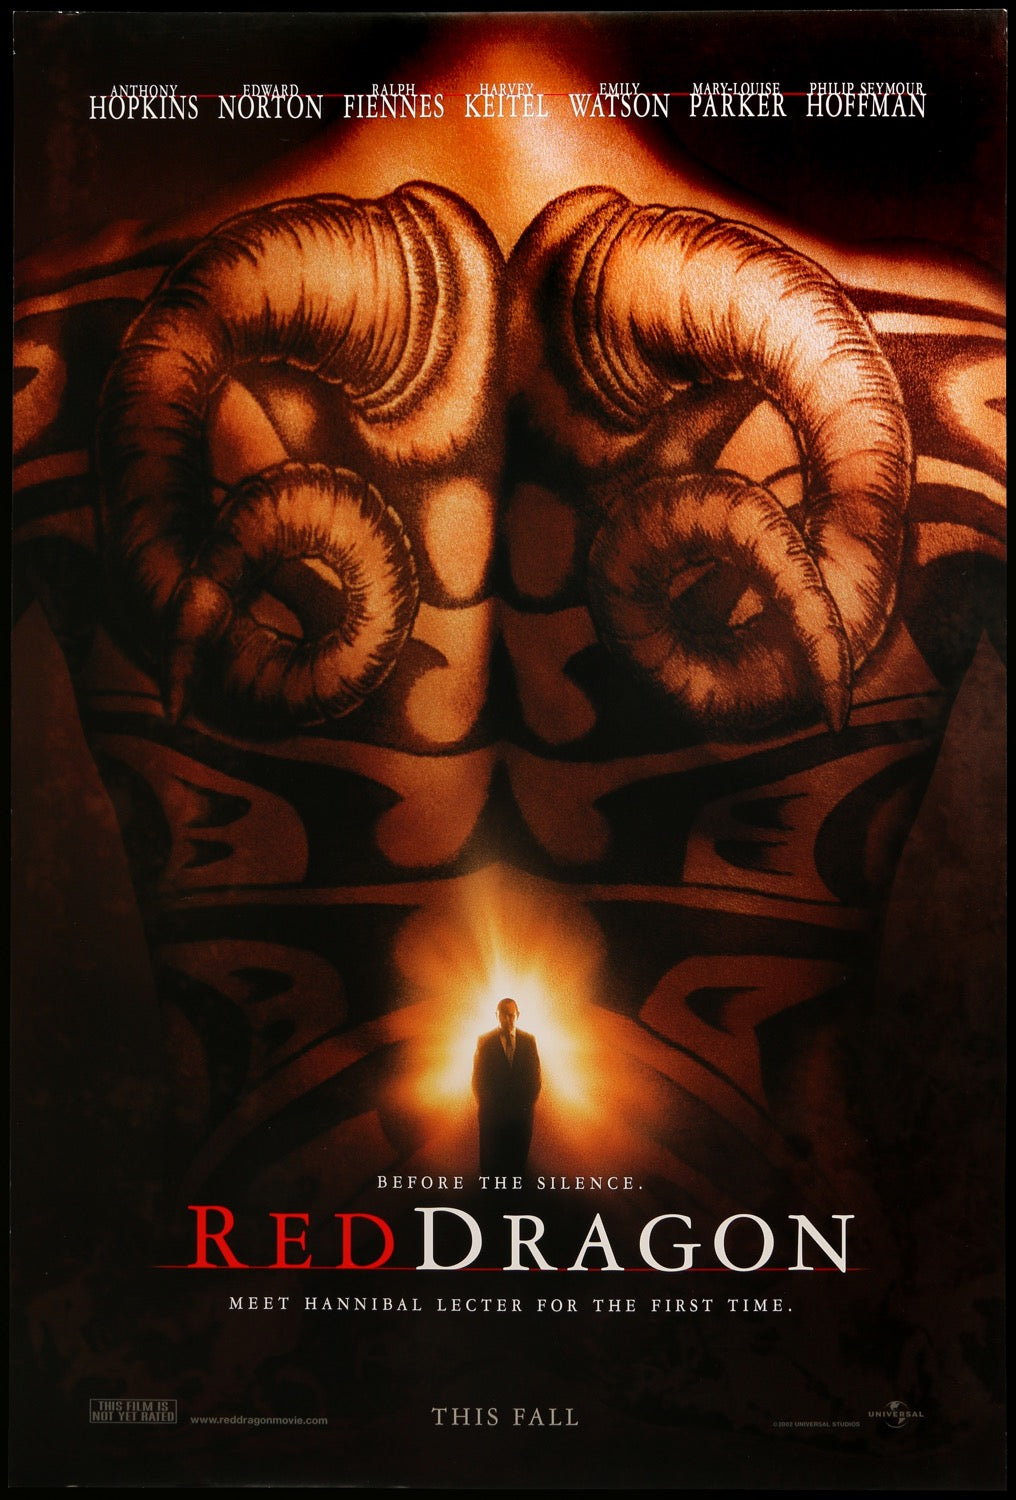 Red Dragon (2002) original movie poster for sale at Original Film Art